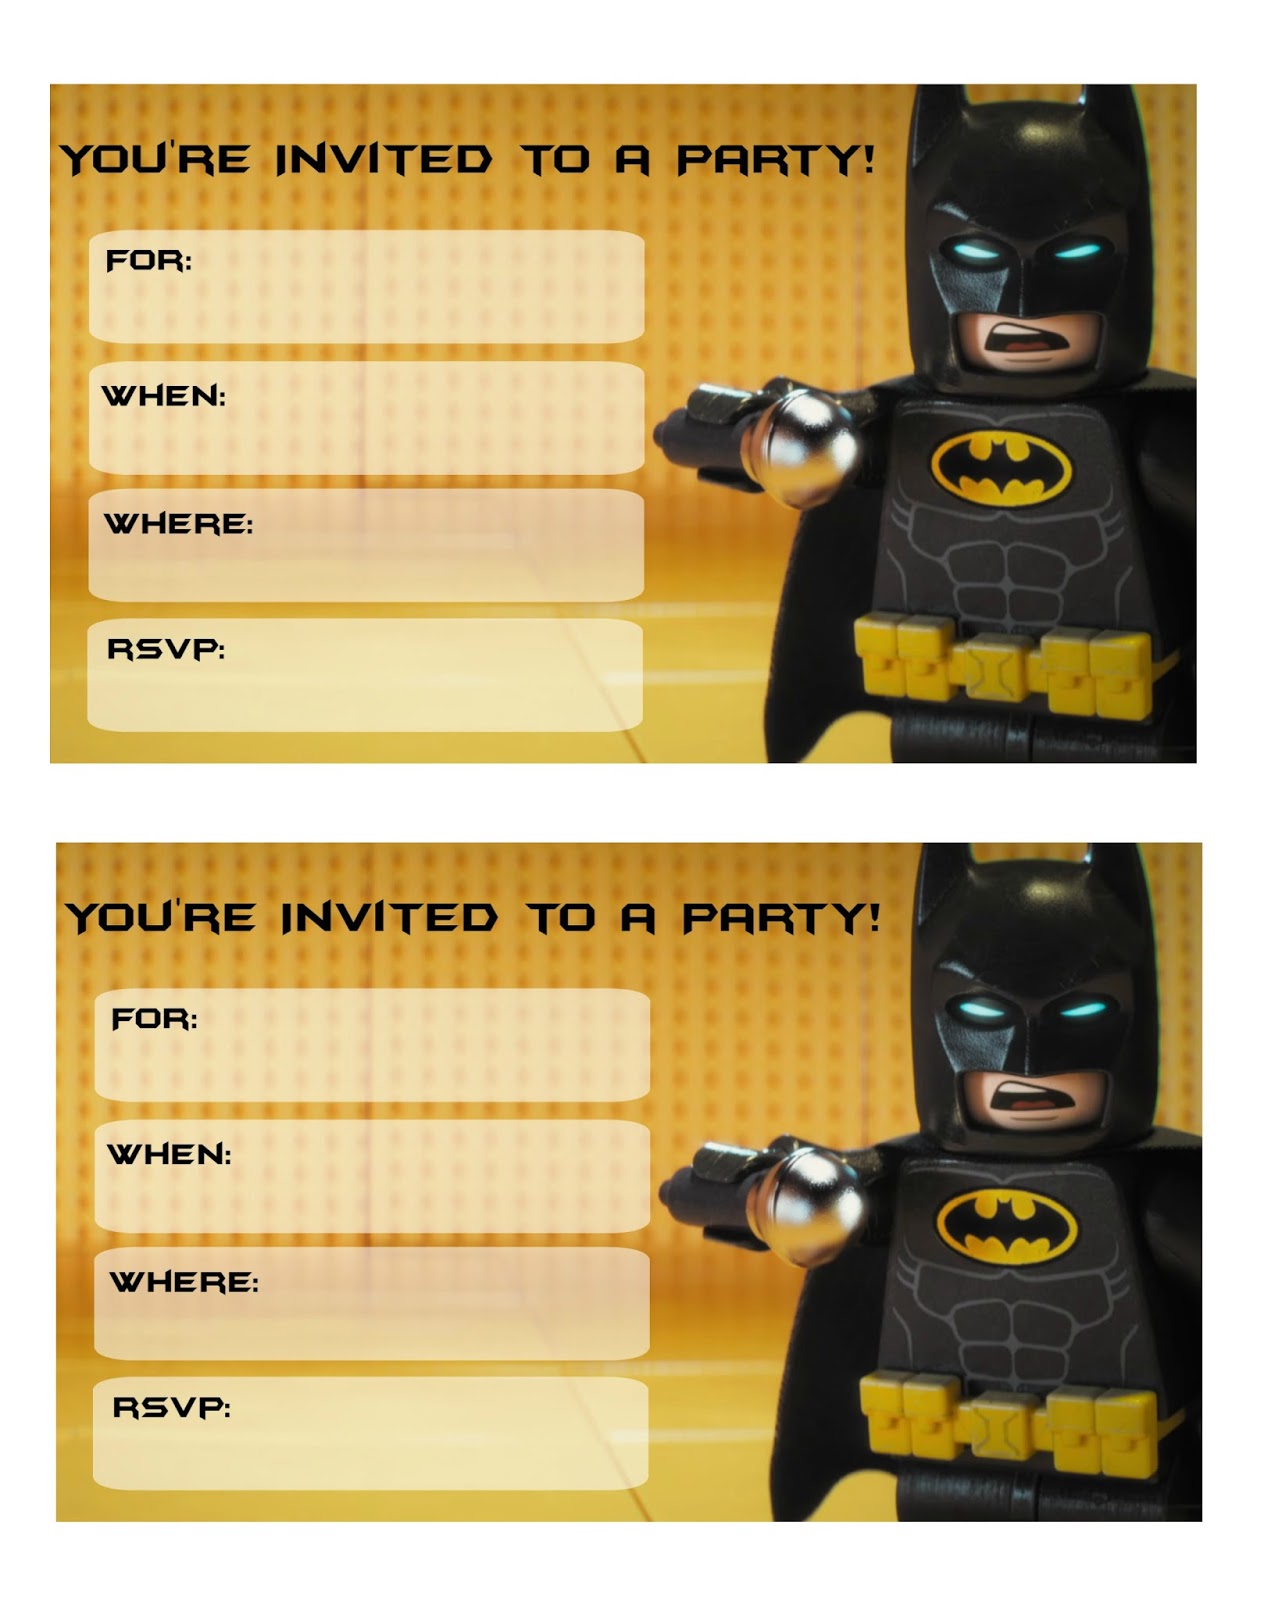 musings-of-an-average-mom-lego-batman-movie-party-invitations